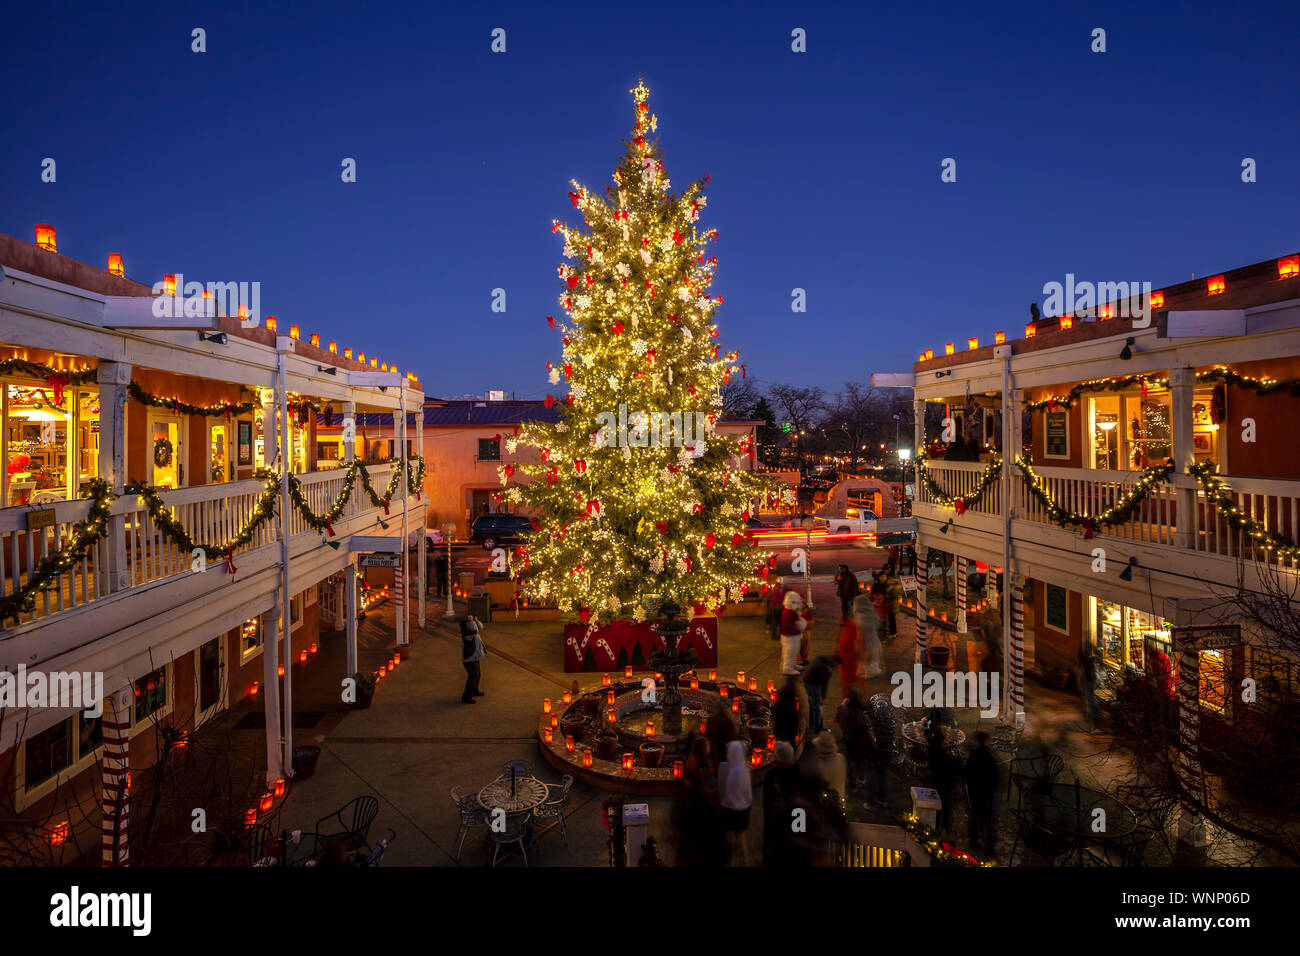 Christmas tree, Plaza Don Luis, Old Town Albuquerque, New Mexico USA Stock Photo